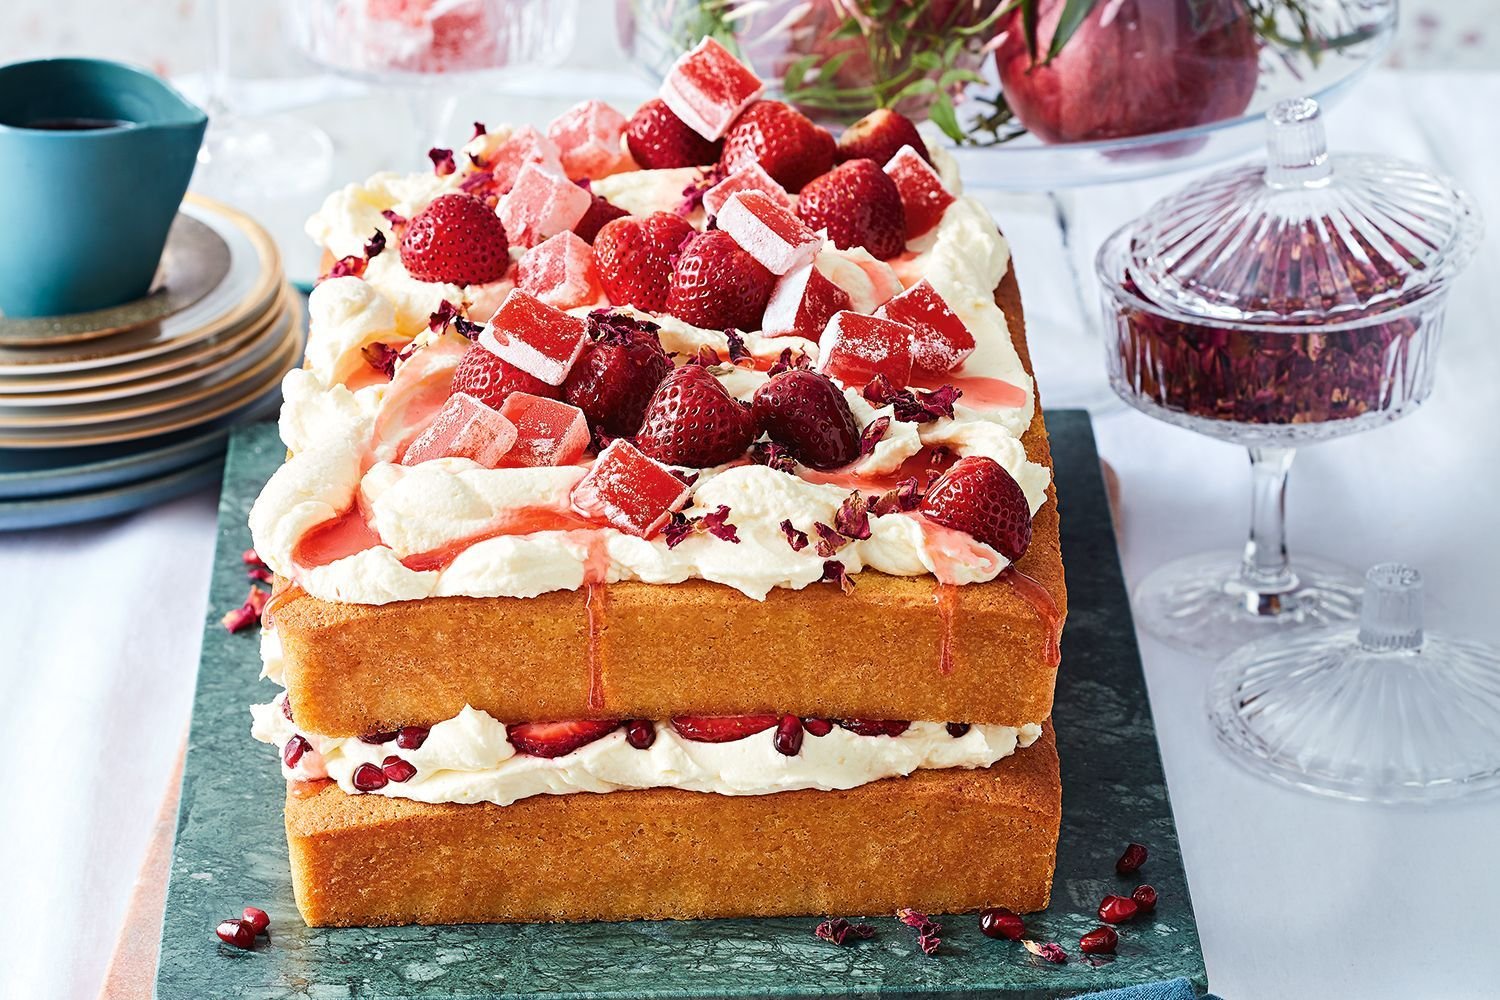 caramilk-cake-with-turkish-delight-strawberry-and-pomegranate-159778-2.jpg